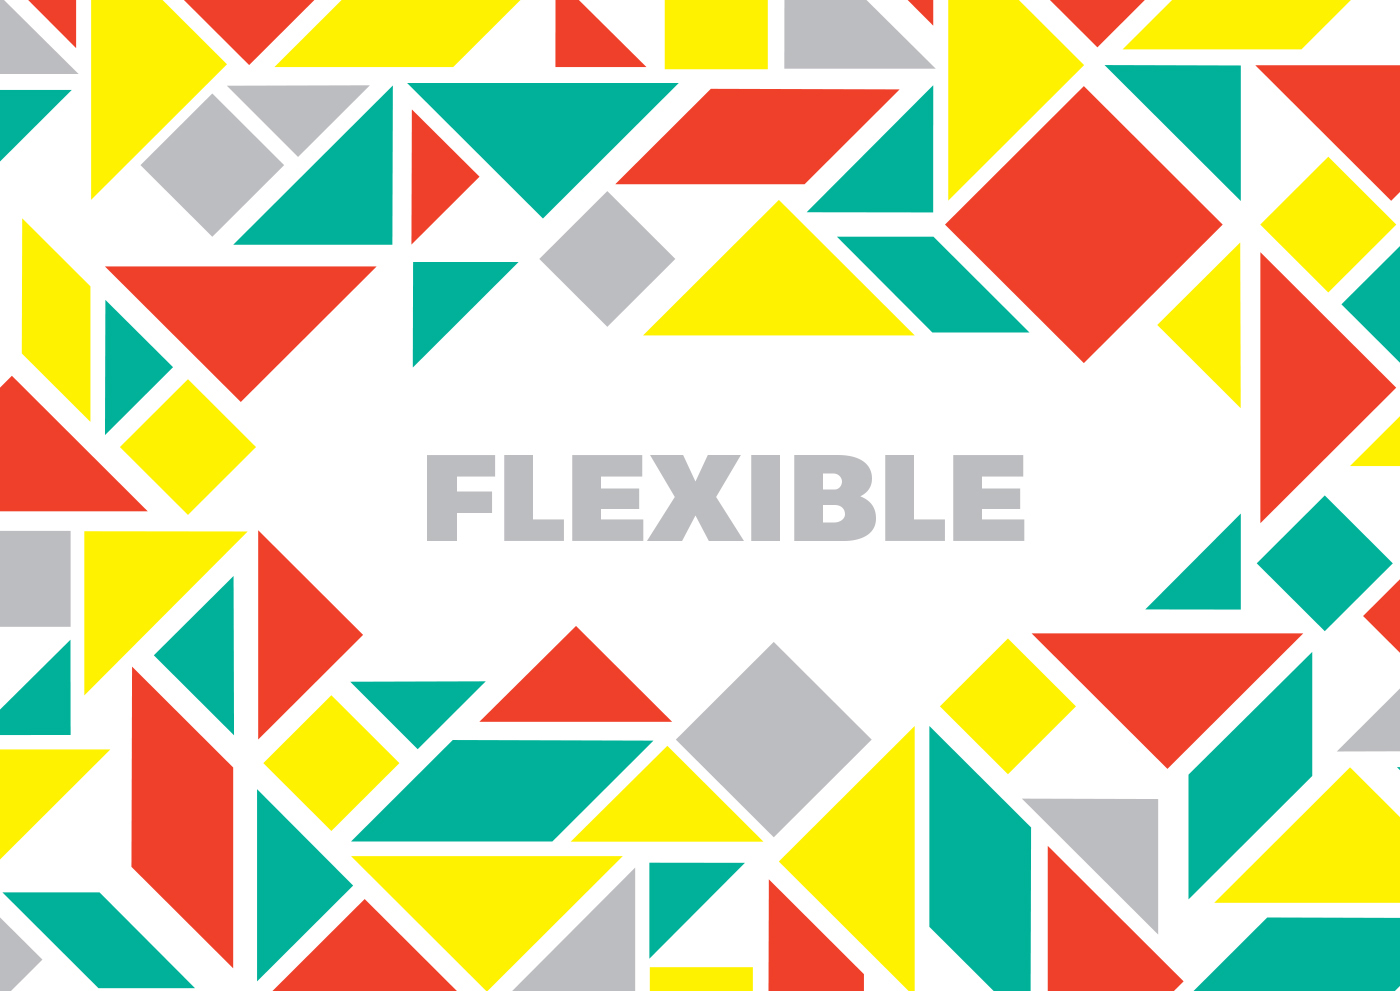 Bangkok flexible bkk